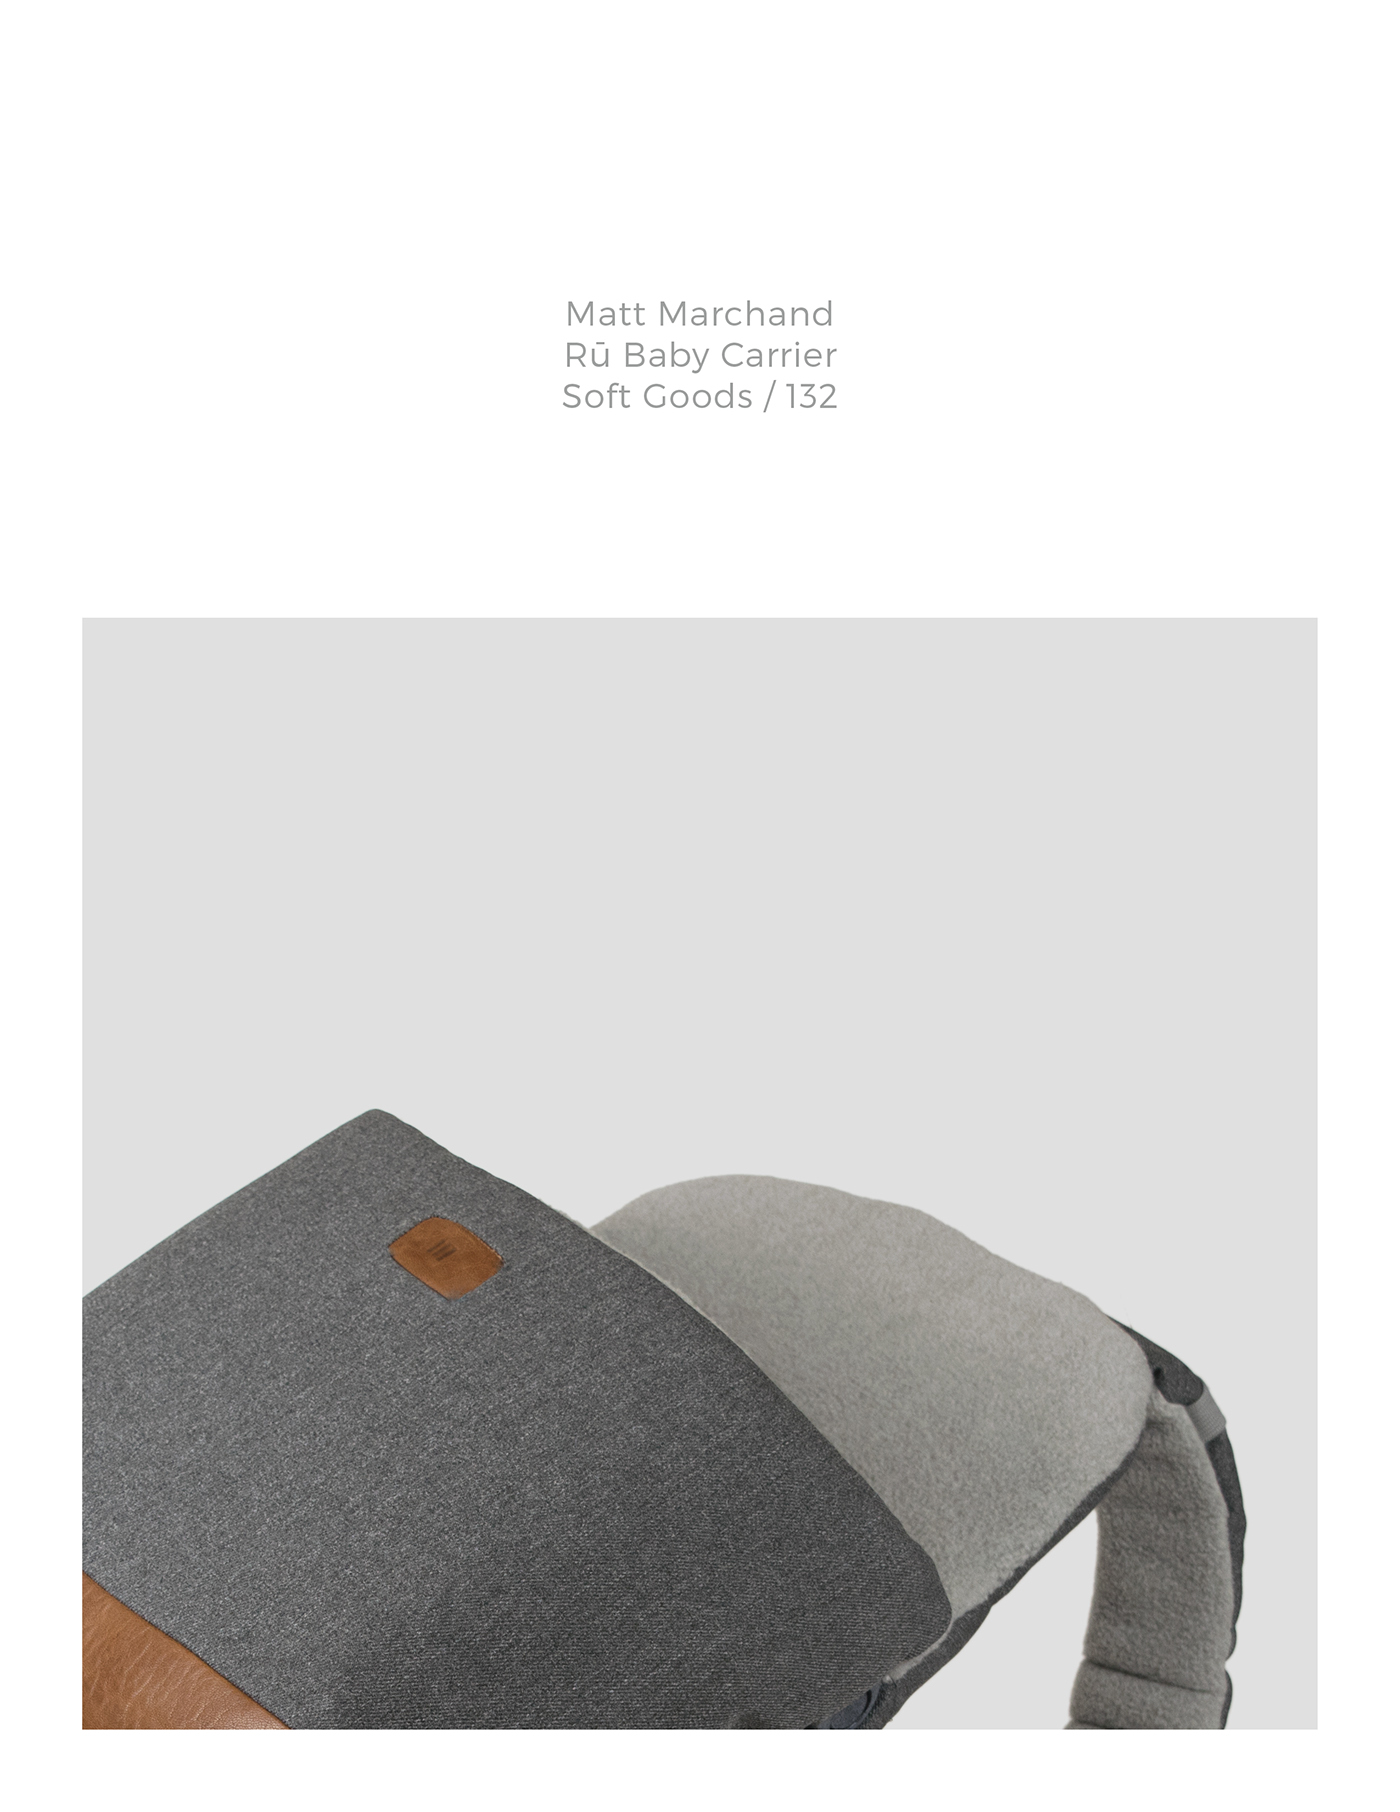 industrial design  product design  Baby Carrier matt marchand softgoods soft goods backpack